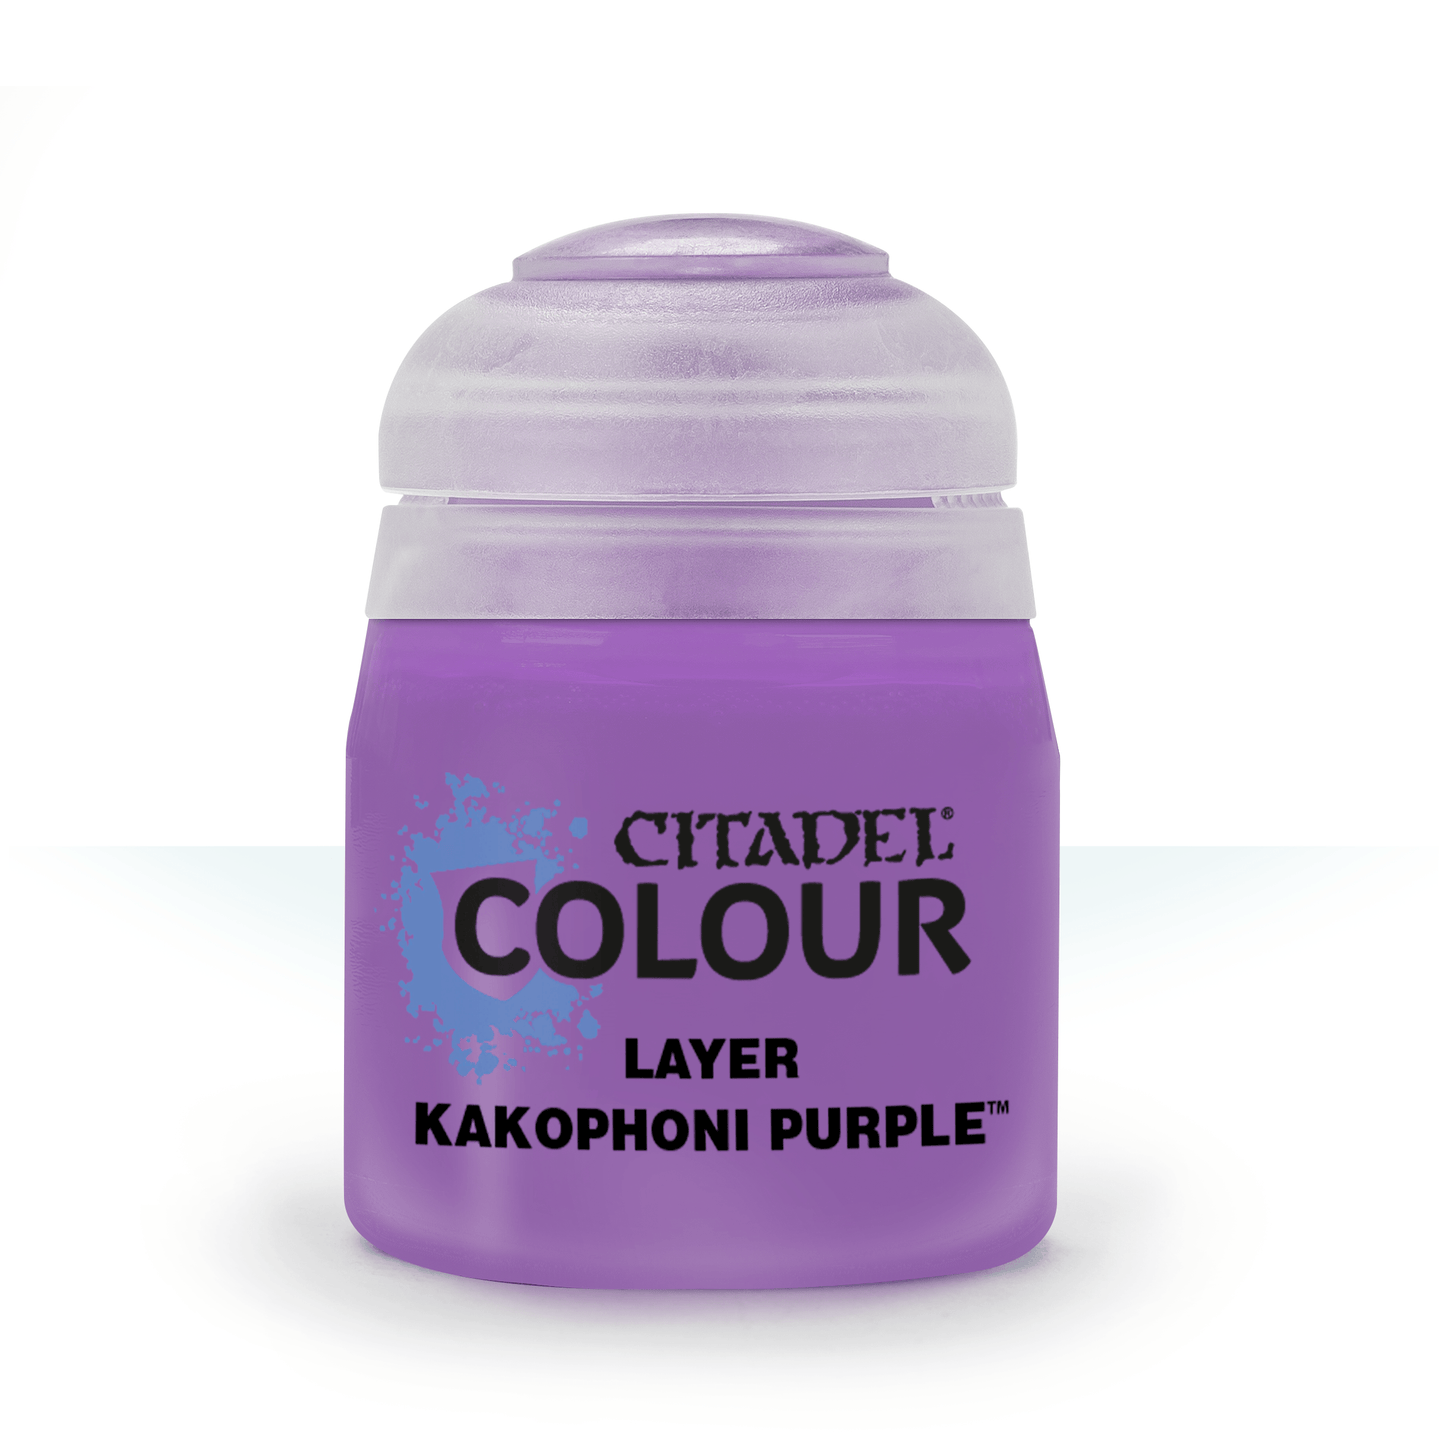 Citadel Colour - Kakophoni Purple Layer Paint